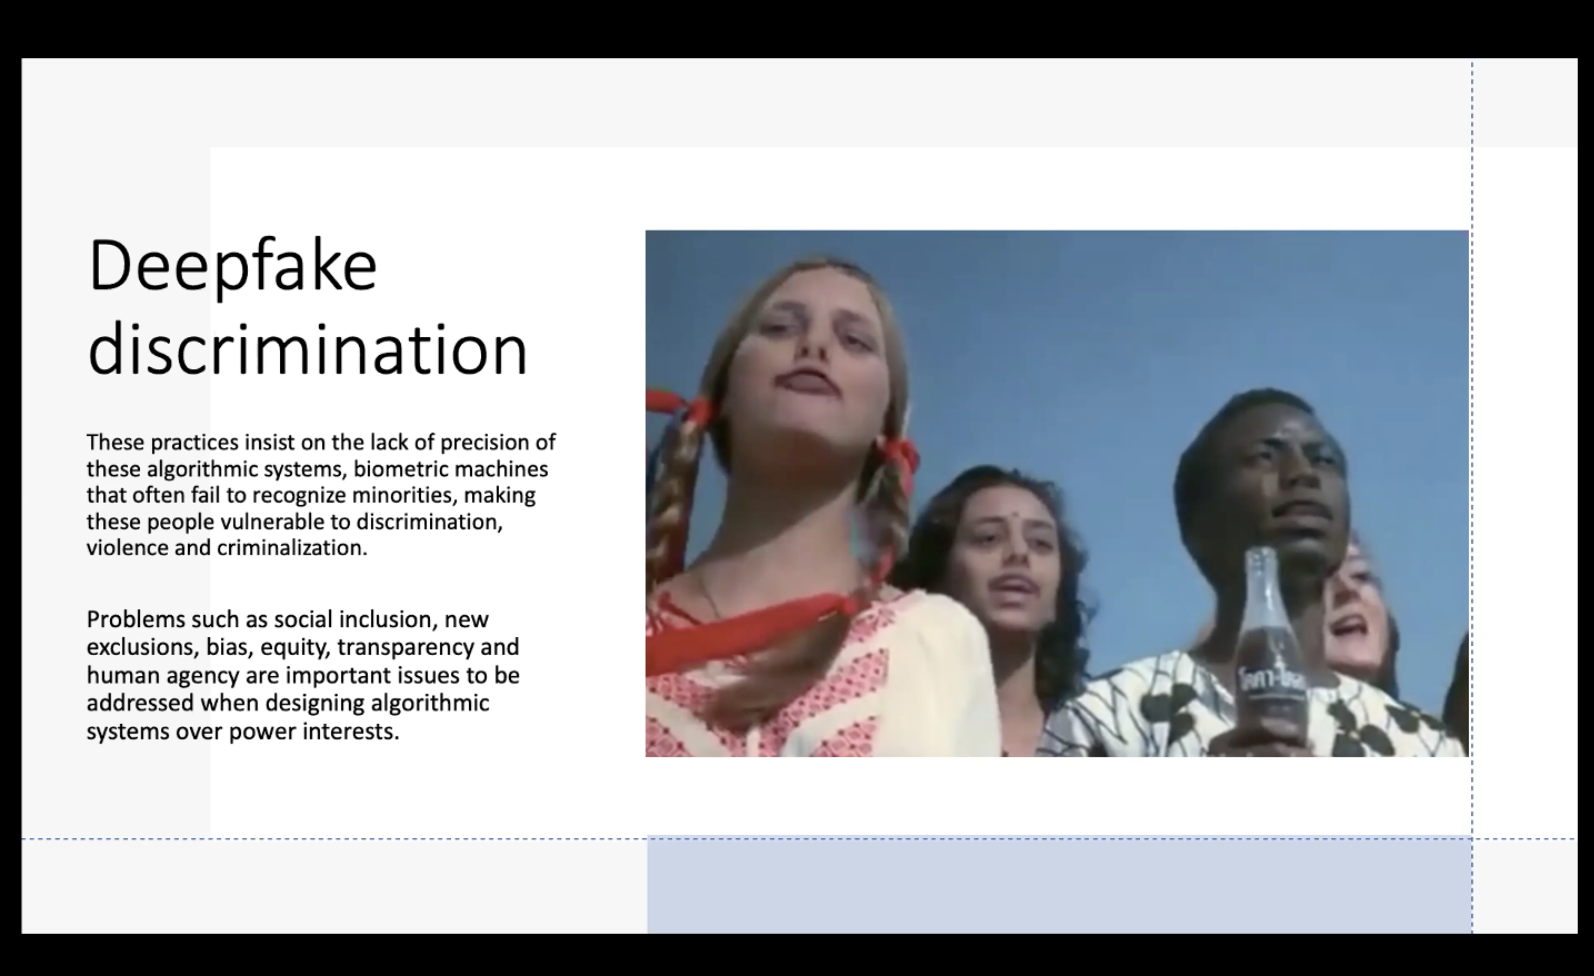 A screenshot from the Team One presentation addressing “Deepfake Descrimination”